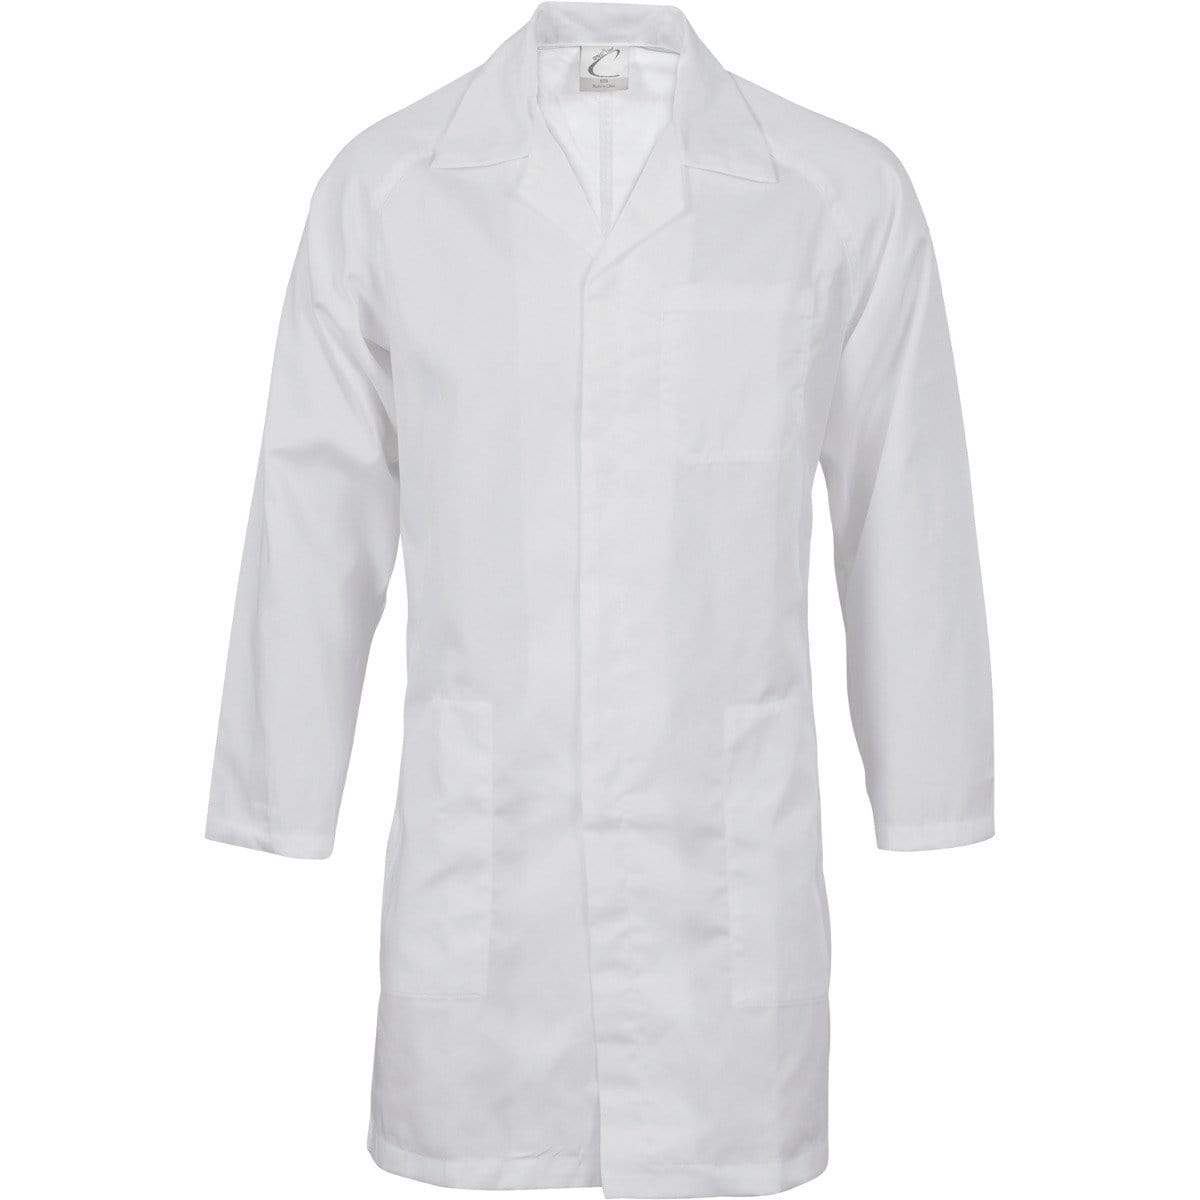 DNC Workwear Hospitality & Chefwear White / 87R DNC WORKWEAR Food Industry Dust Coat 3501